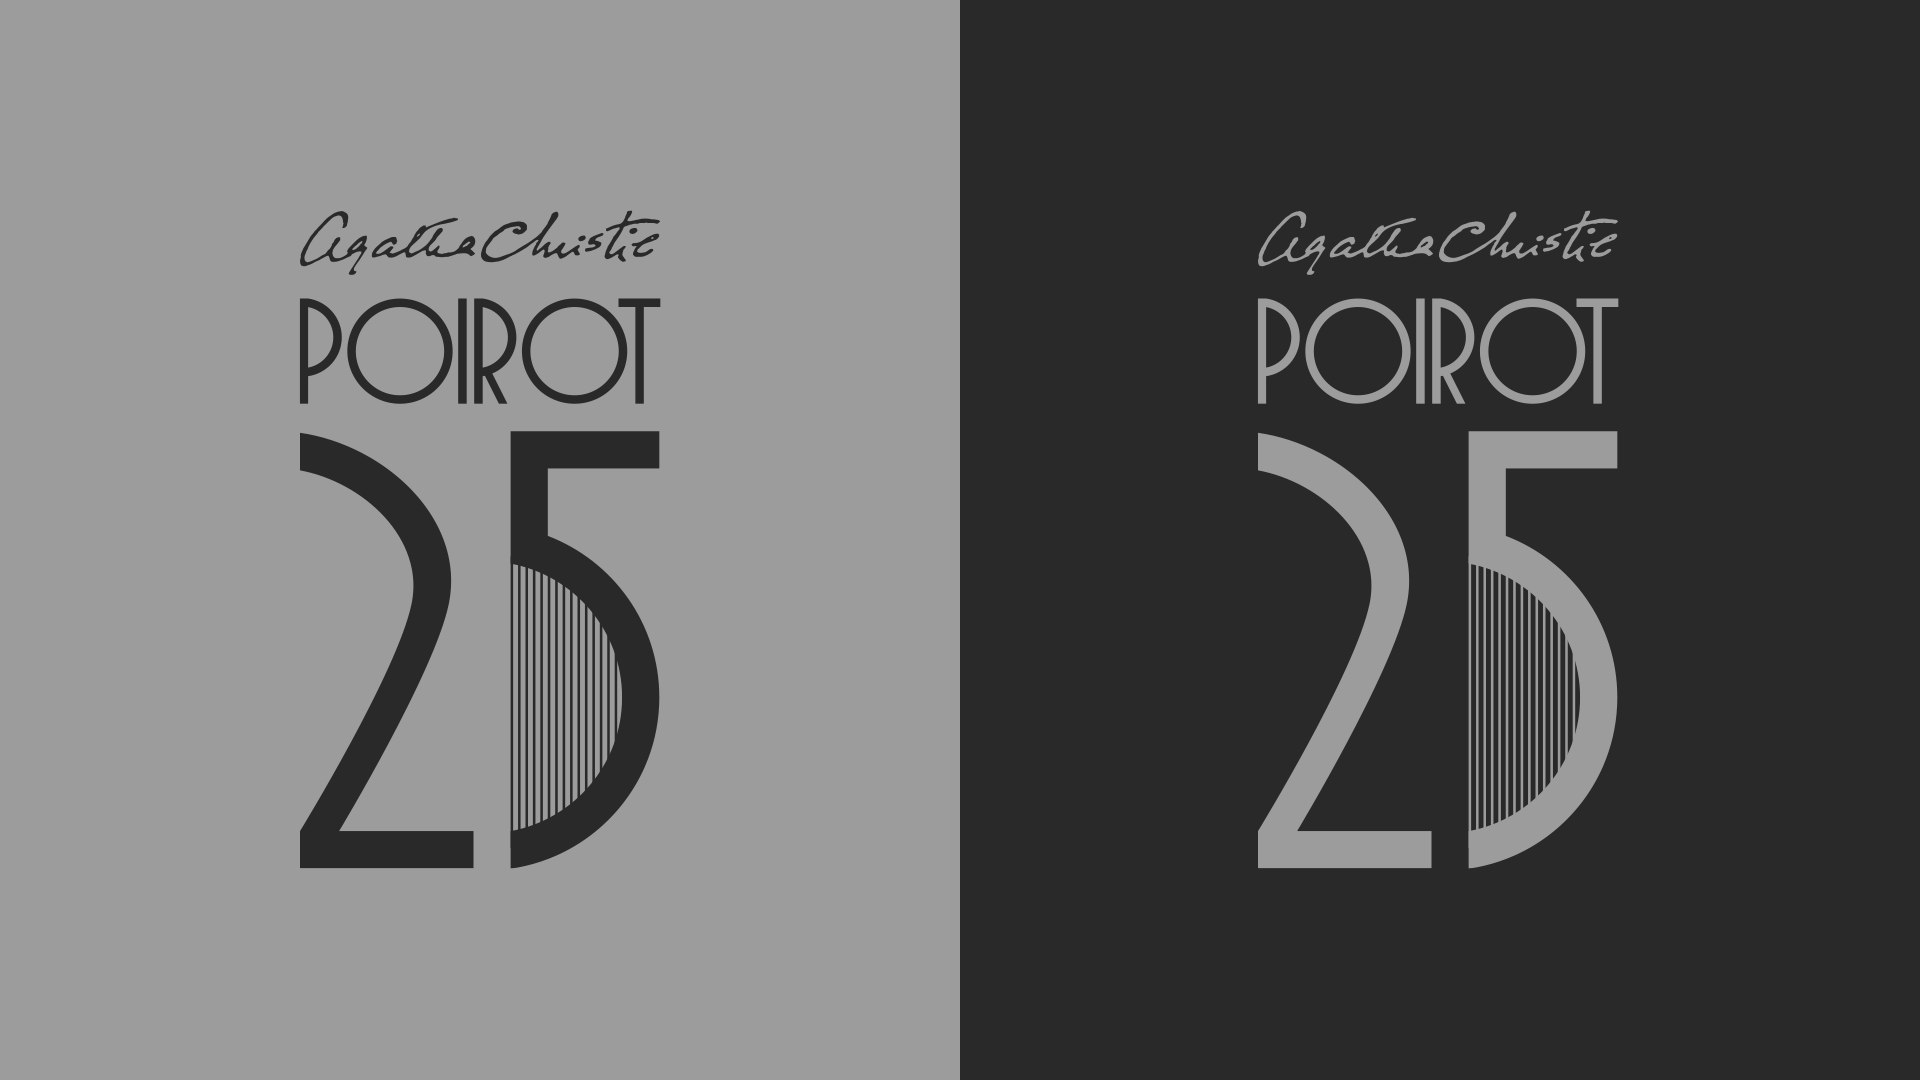 Jason Ford - Poirot 25th Anniversary Logos